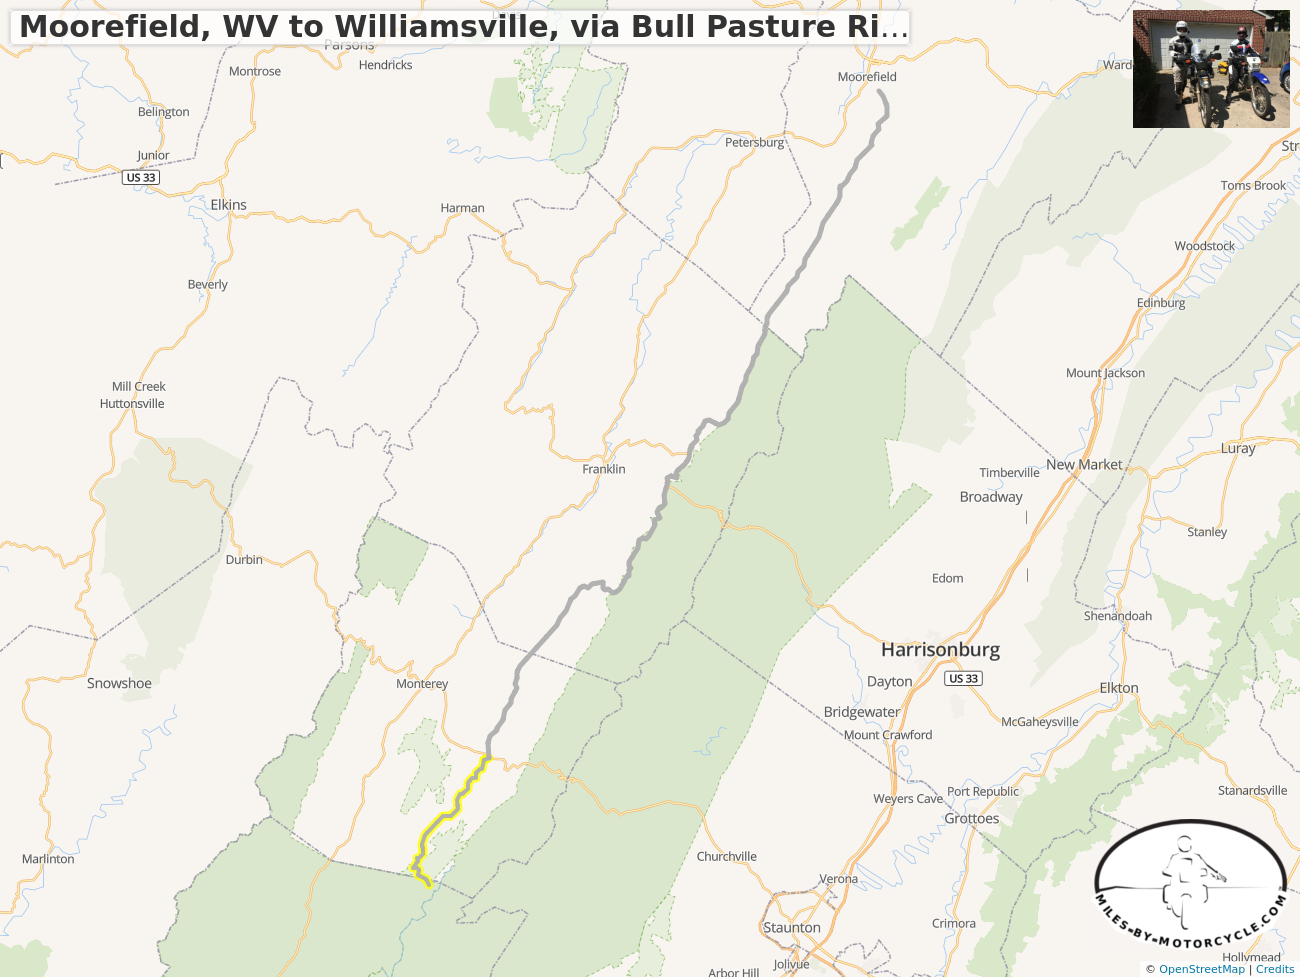 Moorefield, WV to Williamsville, via Bull Pasture River Road